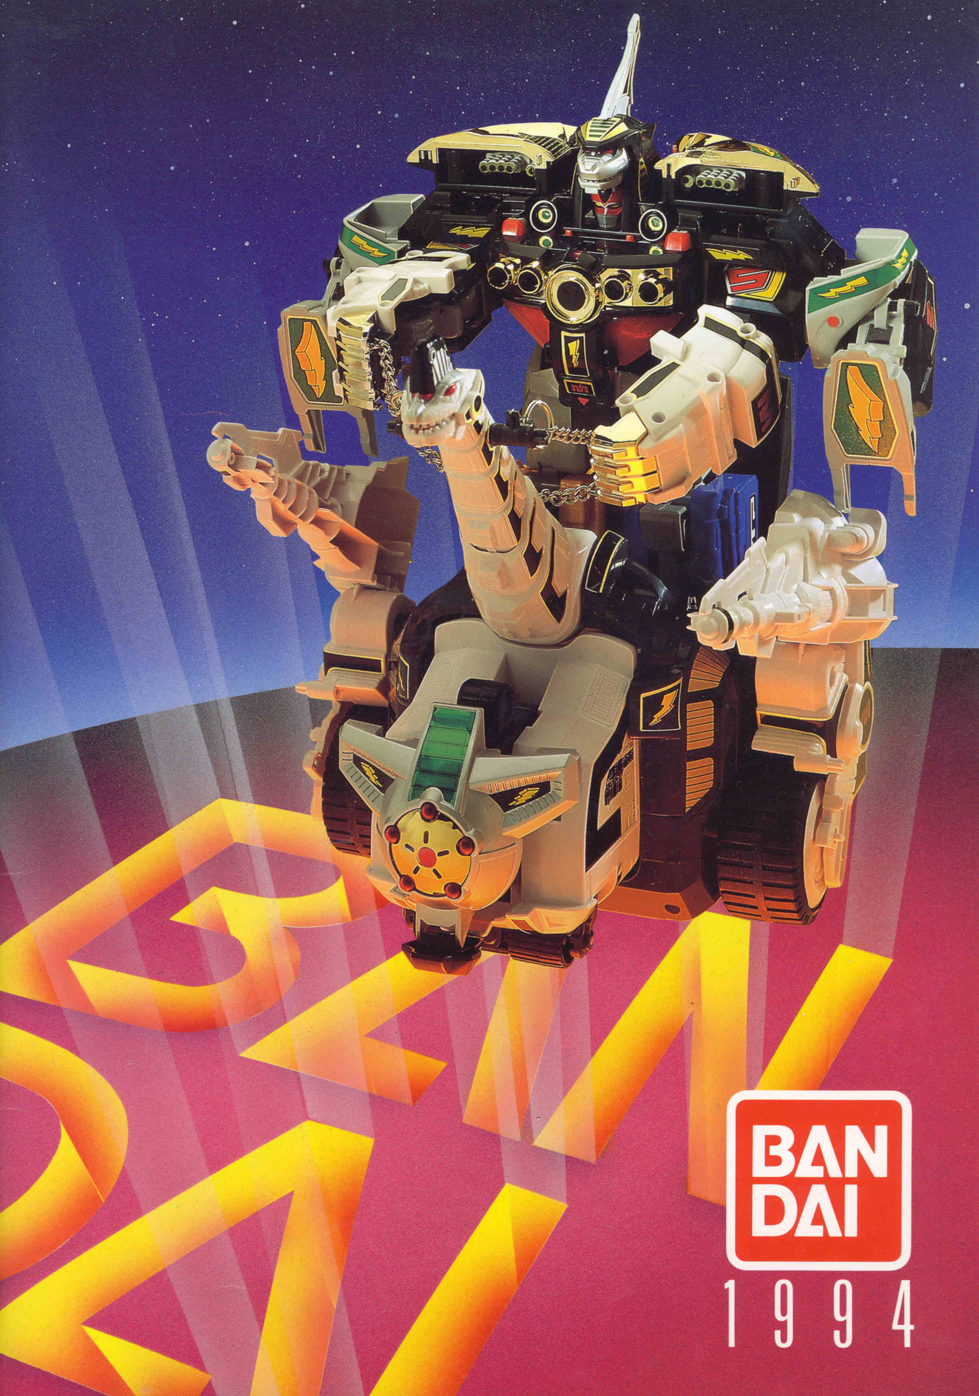 Bandai 1994 (France)